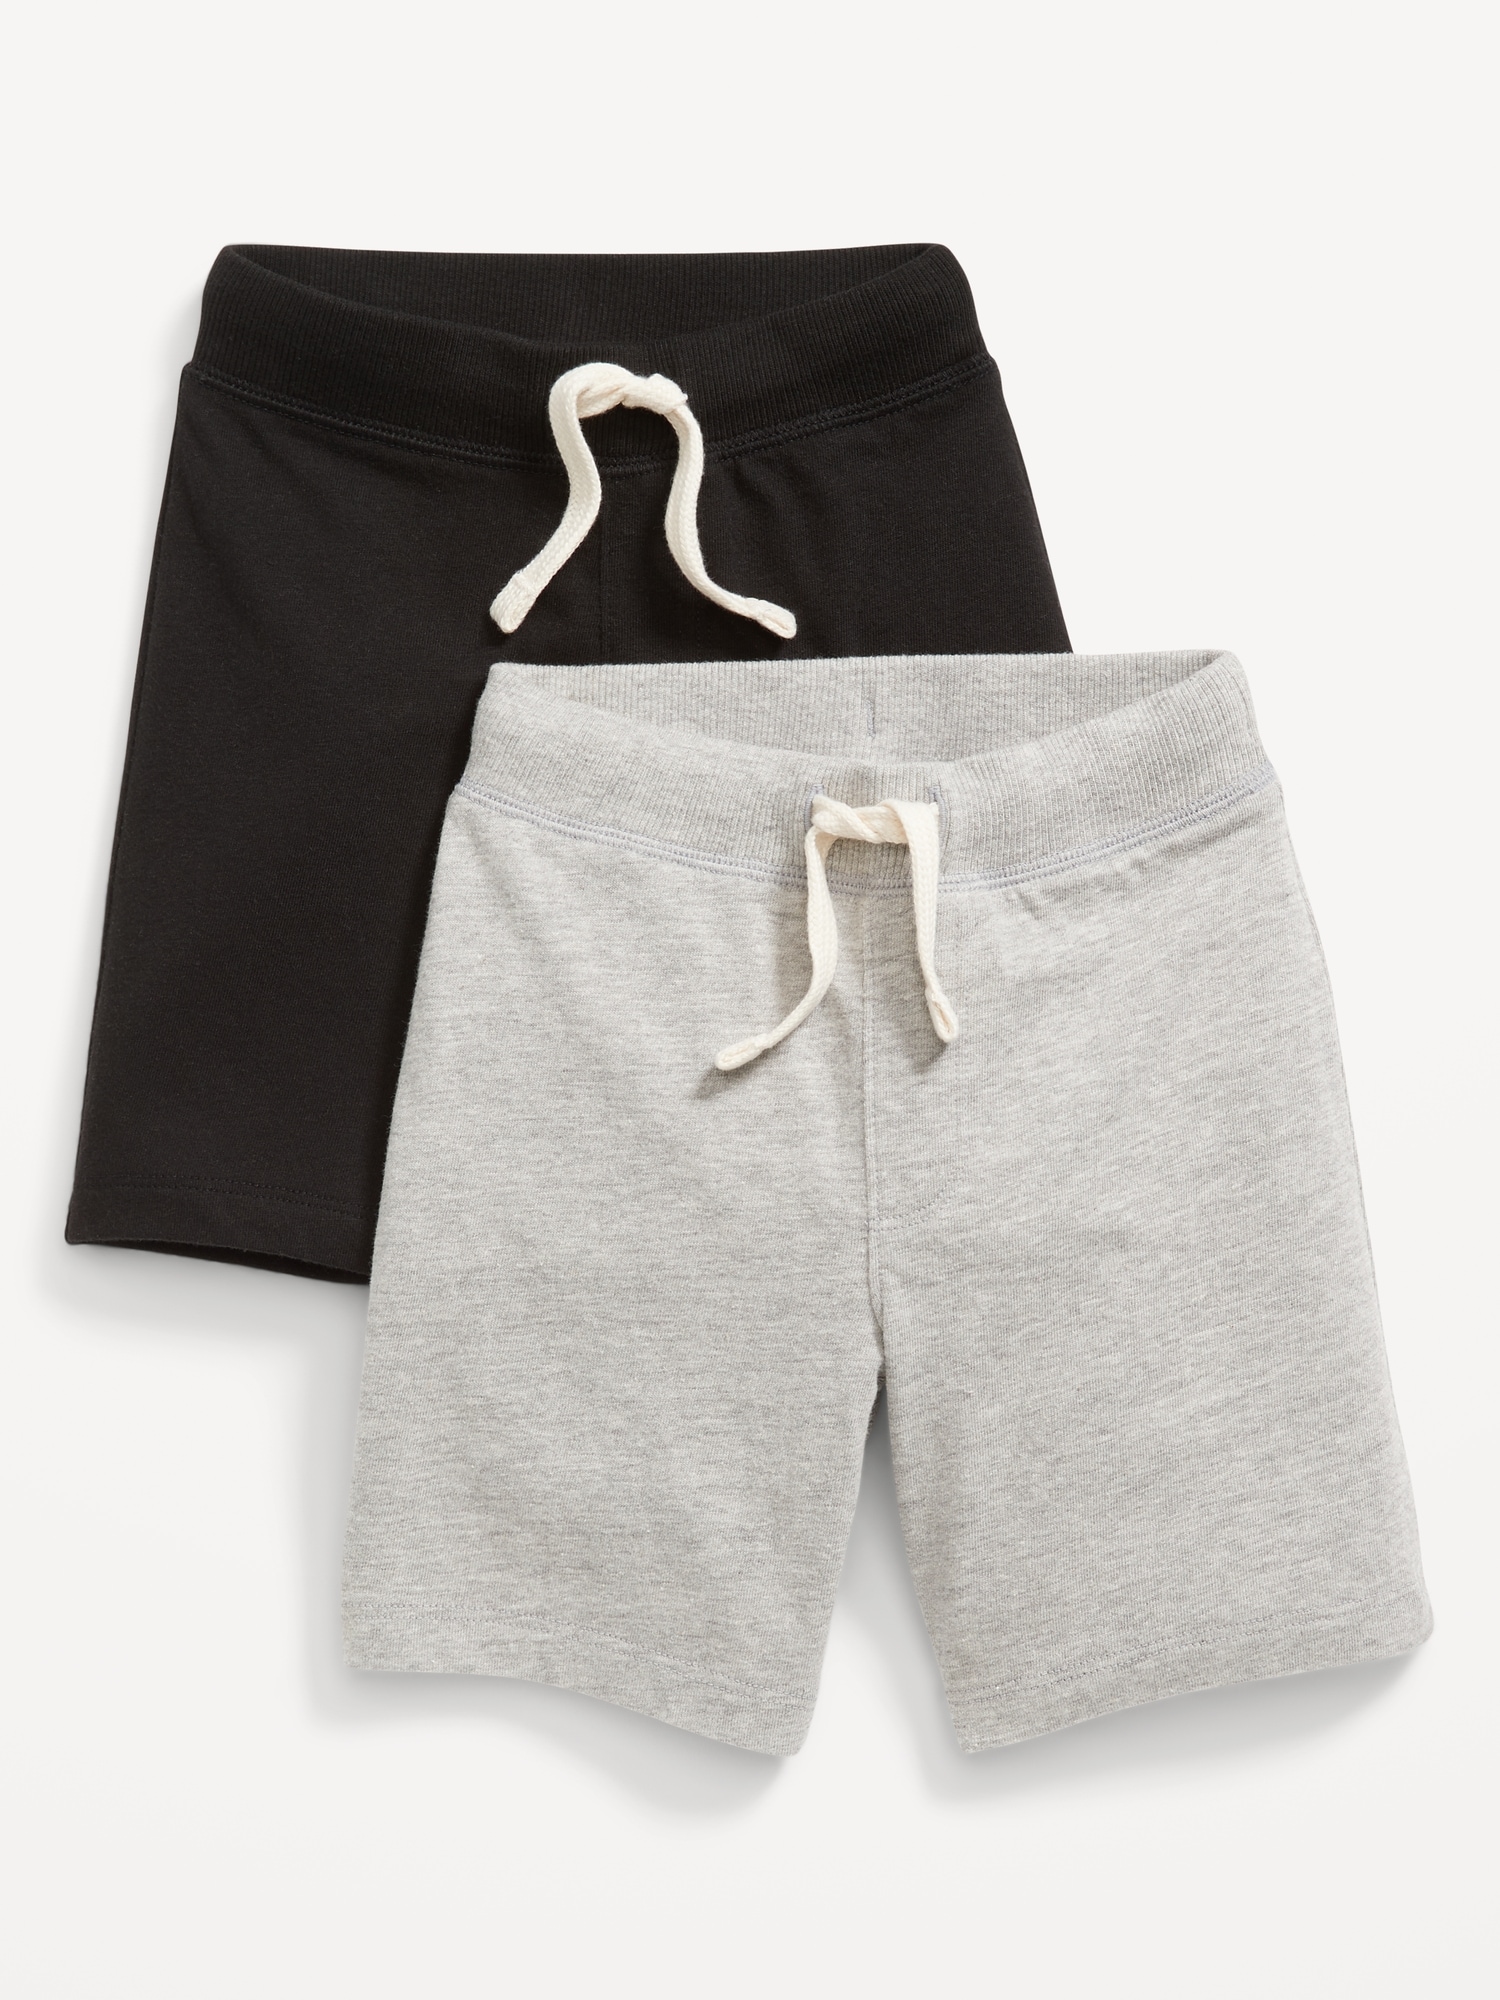 2 cotton blend boy shorts with logo